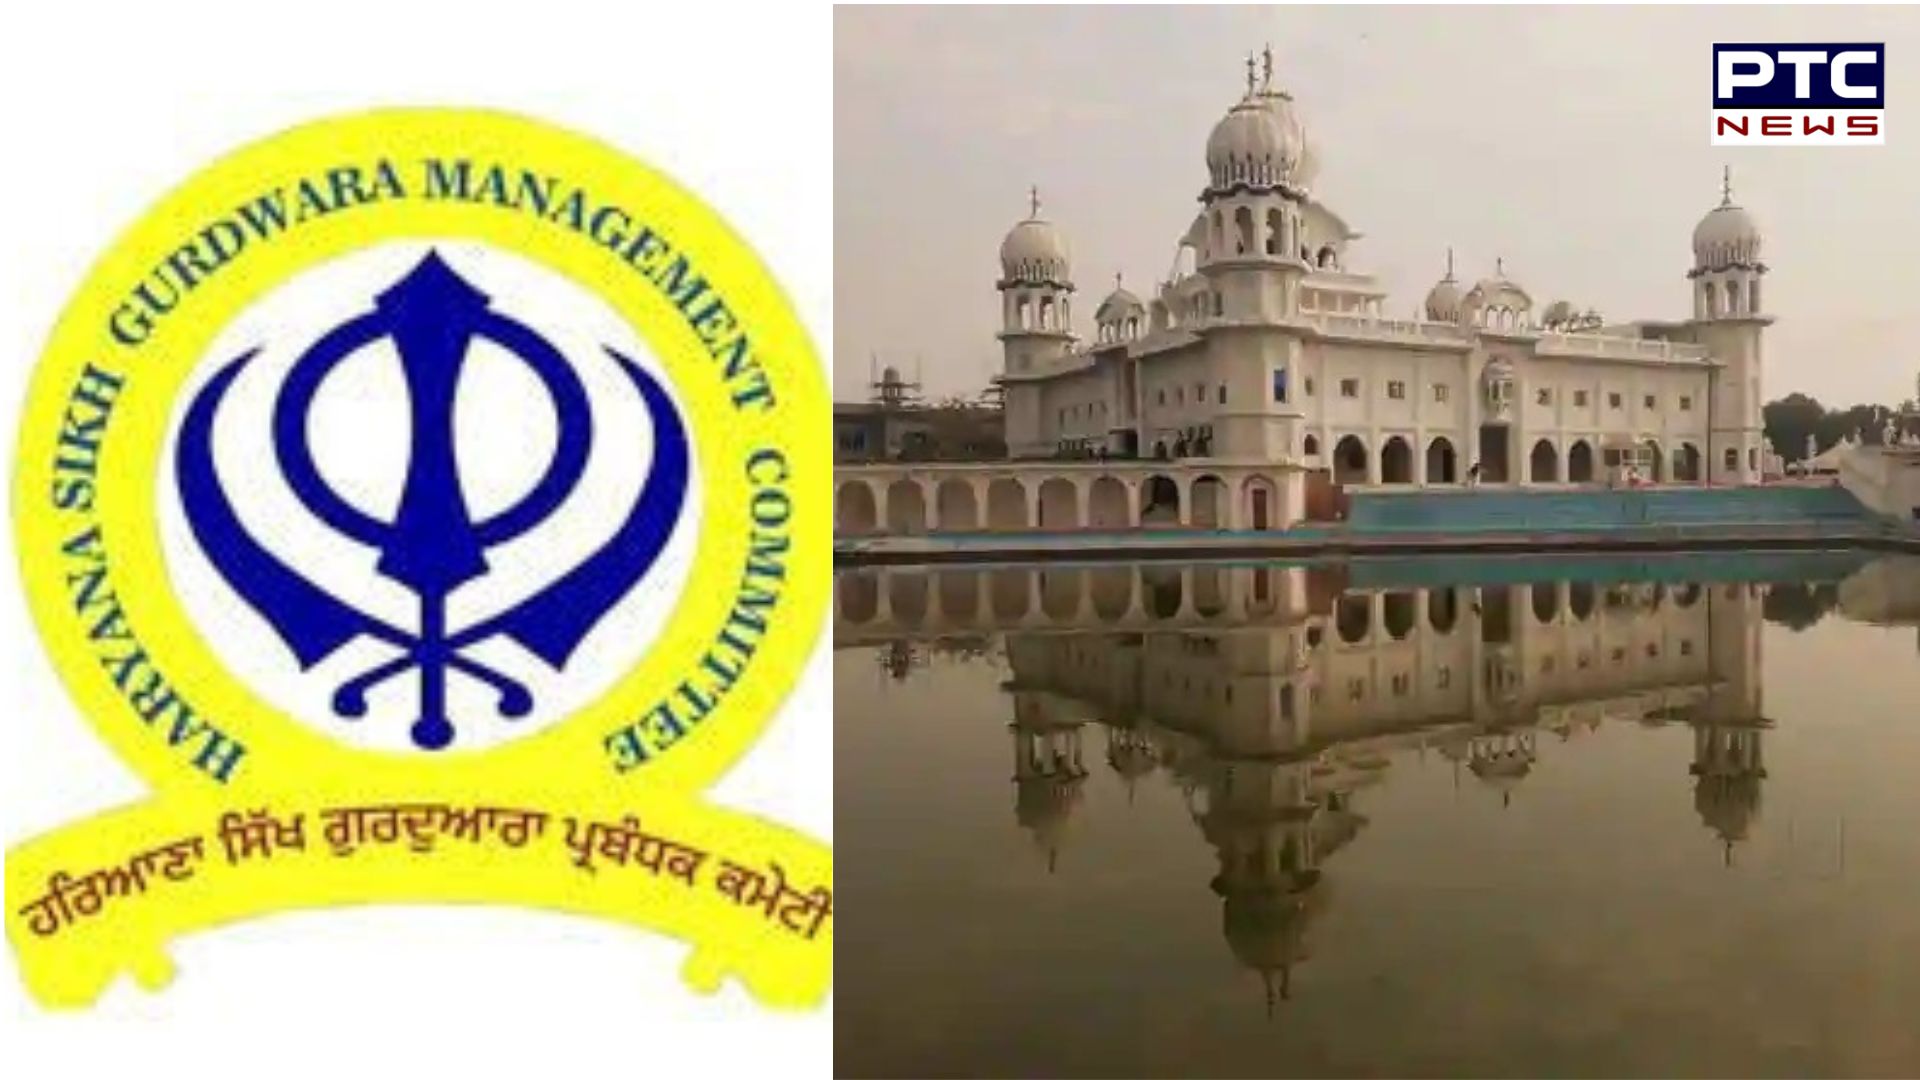 Haryana Sikh Gurdwara Parbandhak Committee election schedule announced | Check Details